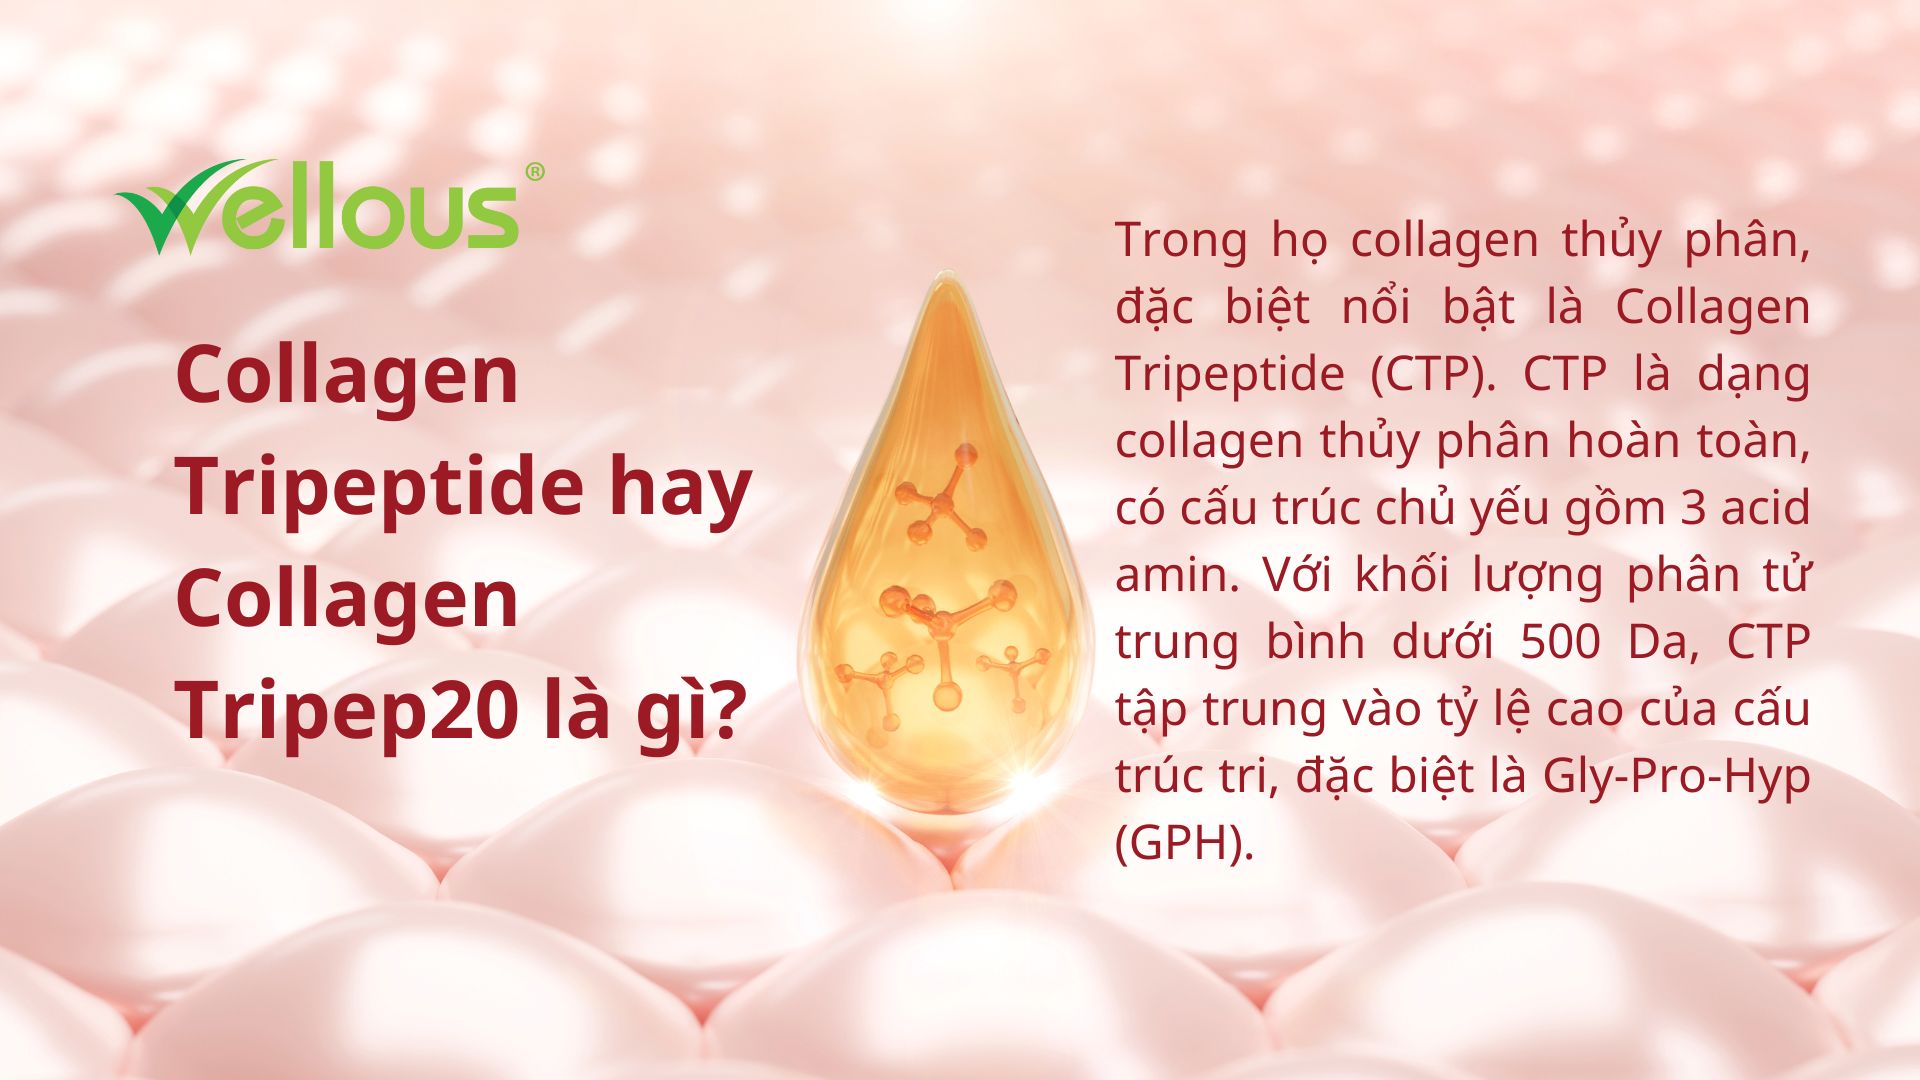 Collagen Tripeptide hay collagen Tripep20 là gì?